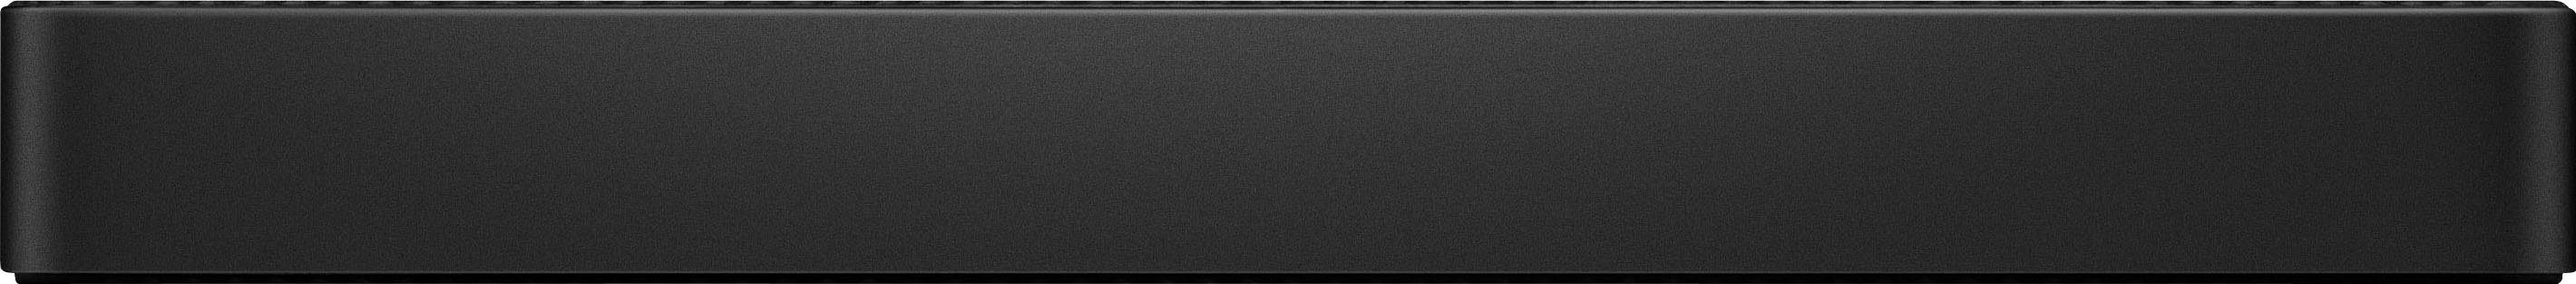 Seagate Expansion Portable 2TB externe HDD-Festplatte (2 TB) 2,5"